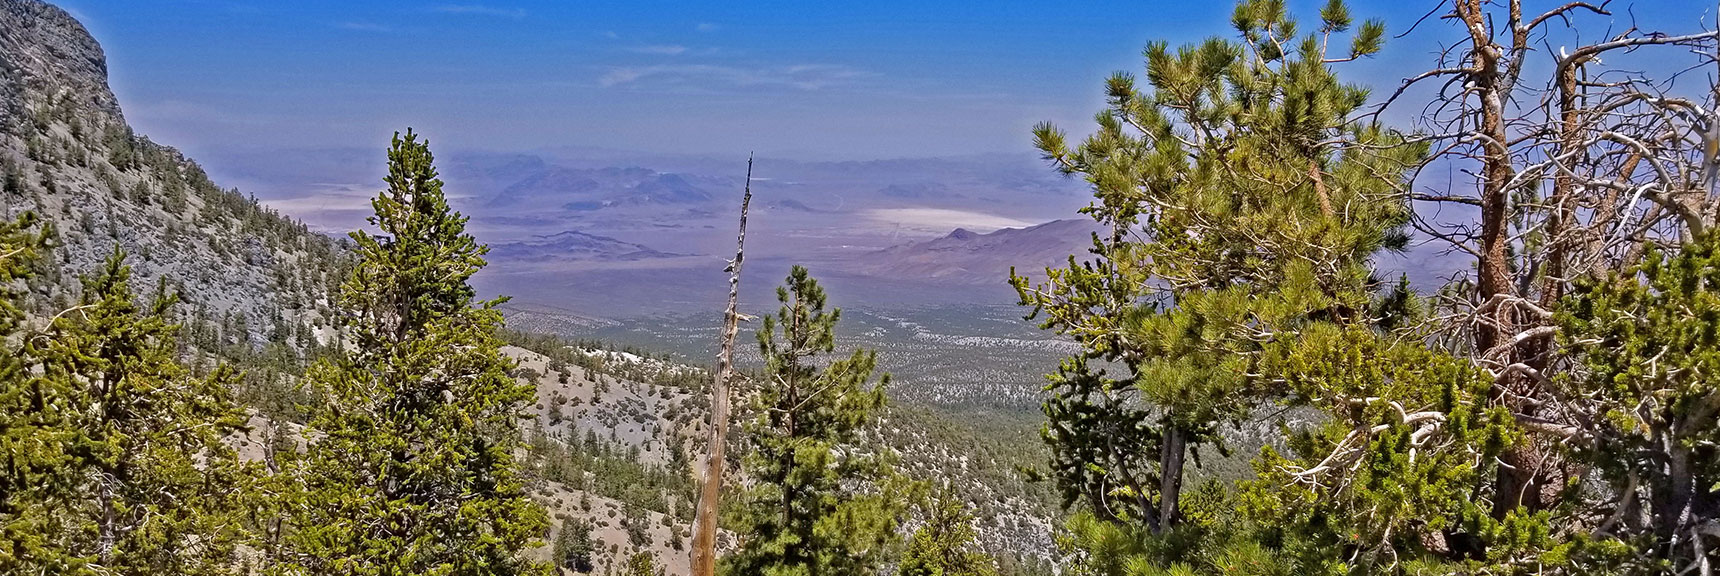 Higher View Down Across Hwy 95 Corridor to the North | Macks Peak | Mt Charleston Wilderness | Spring Mountains, Nevada